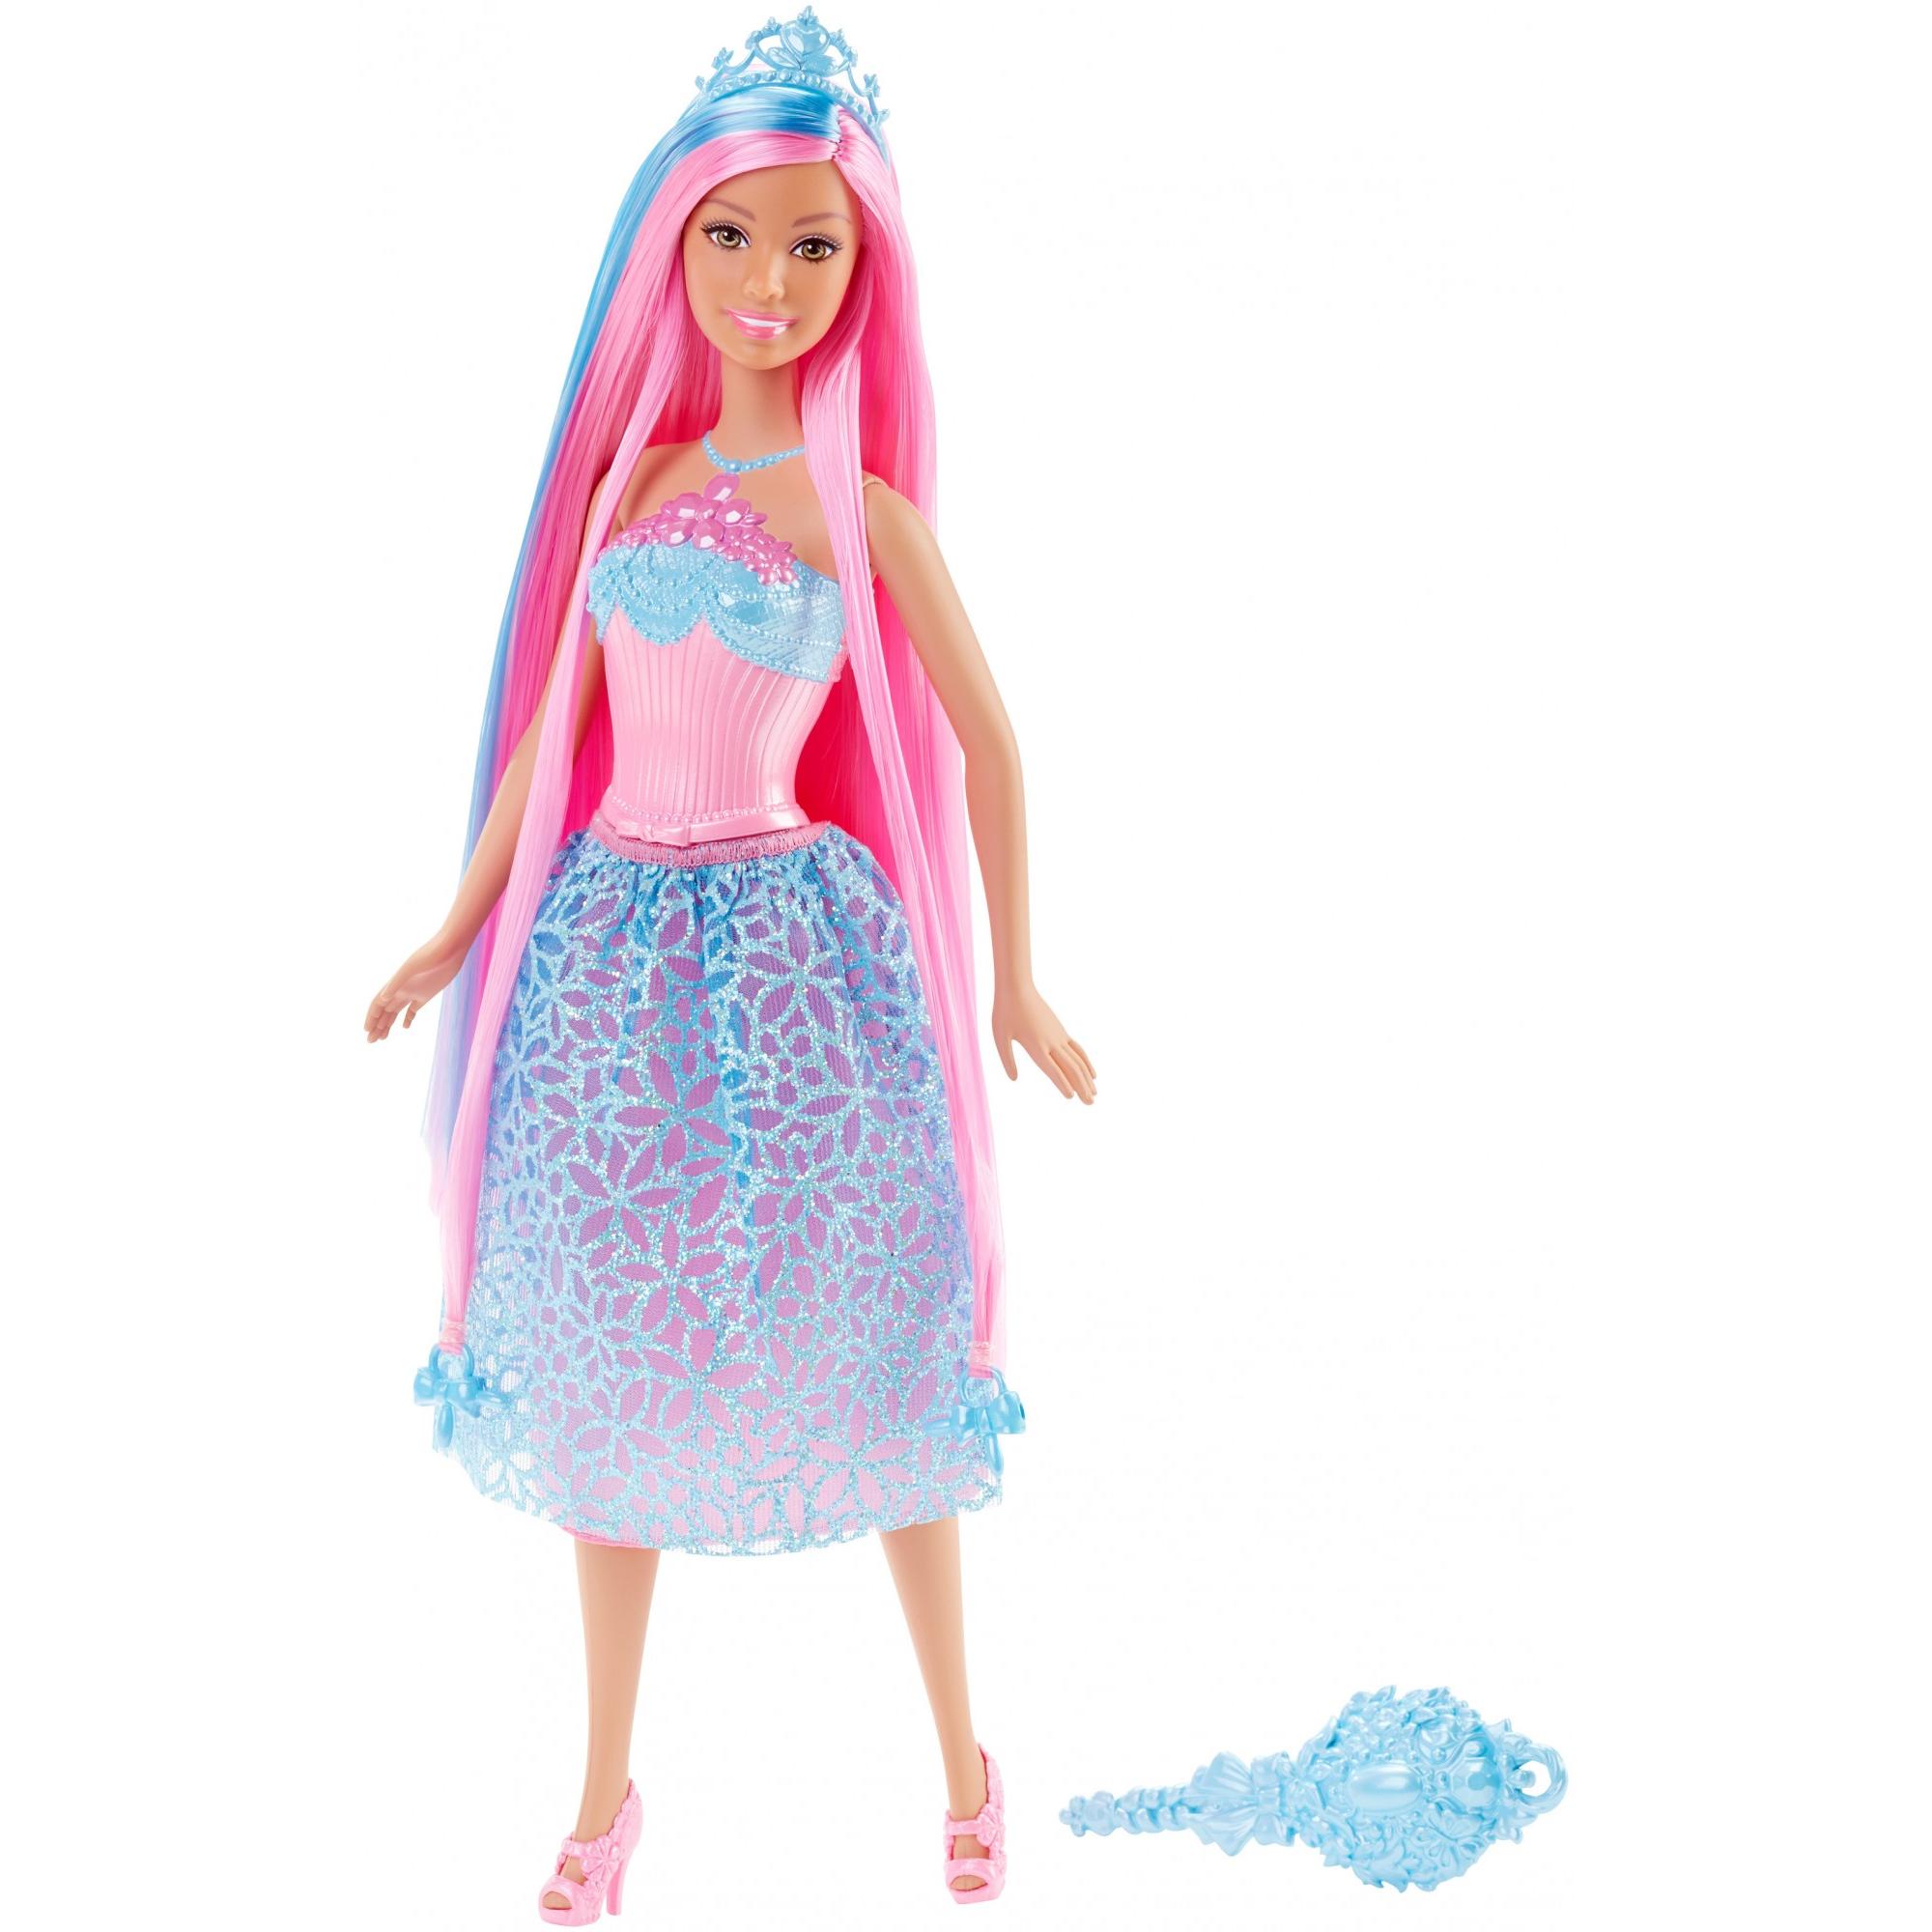 Barbie Endless Hair Kingdom Princess Doll Blue - image 2 of 7